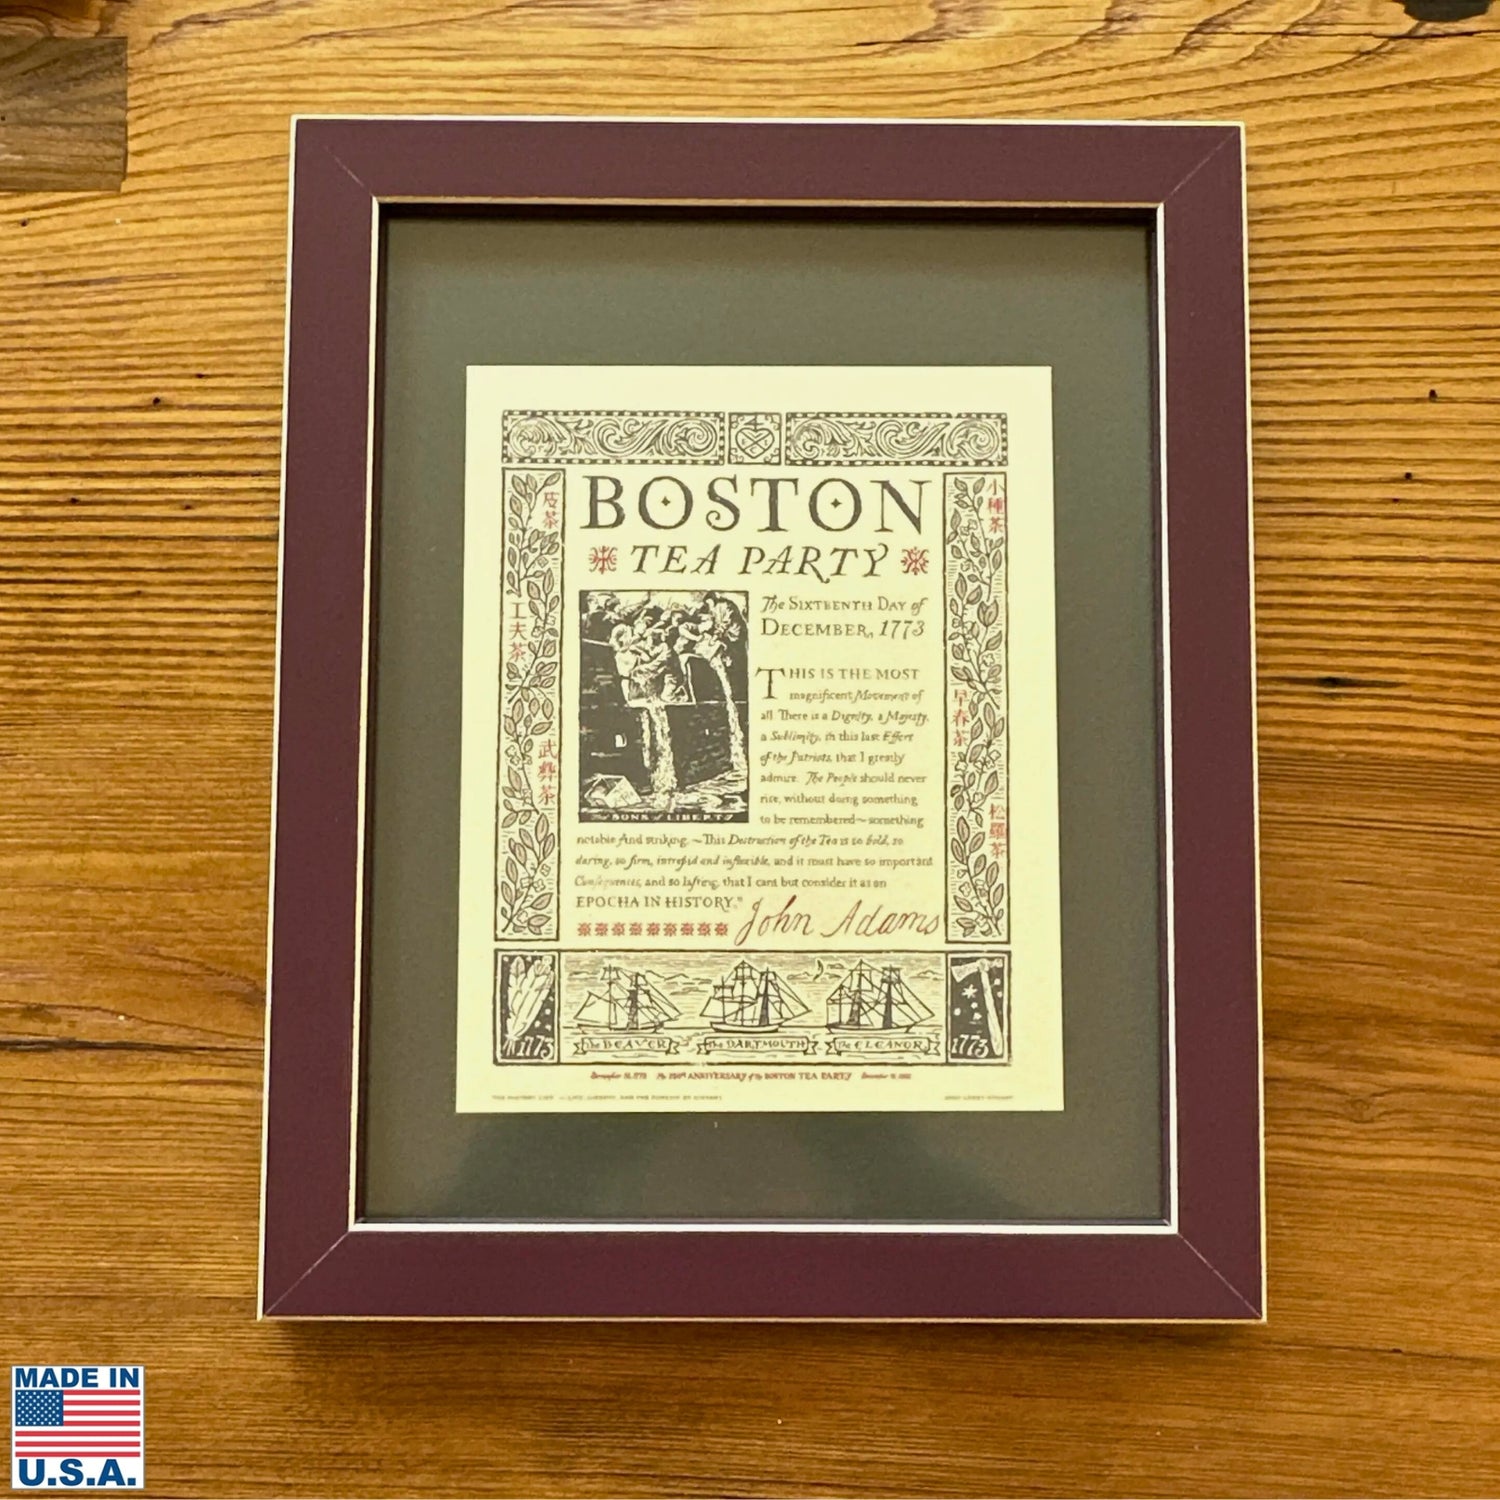 Our "1773" Boston Tea Party Collection